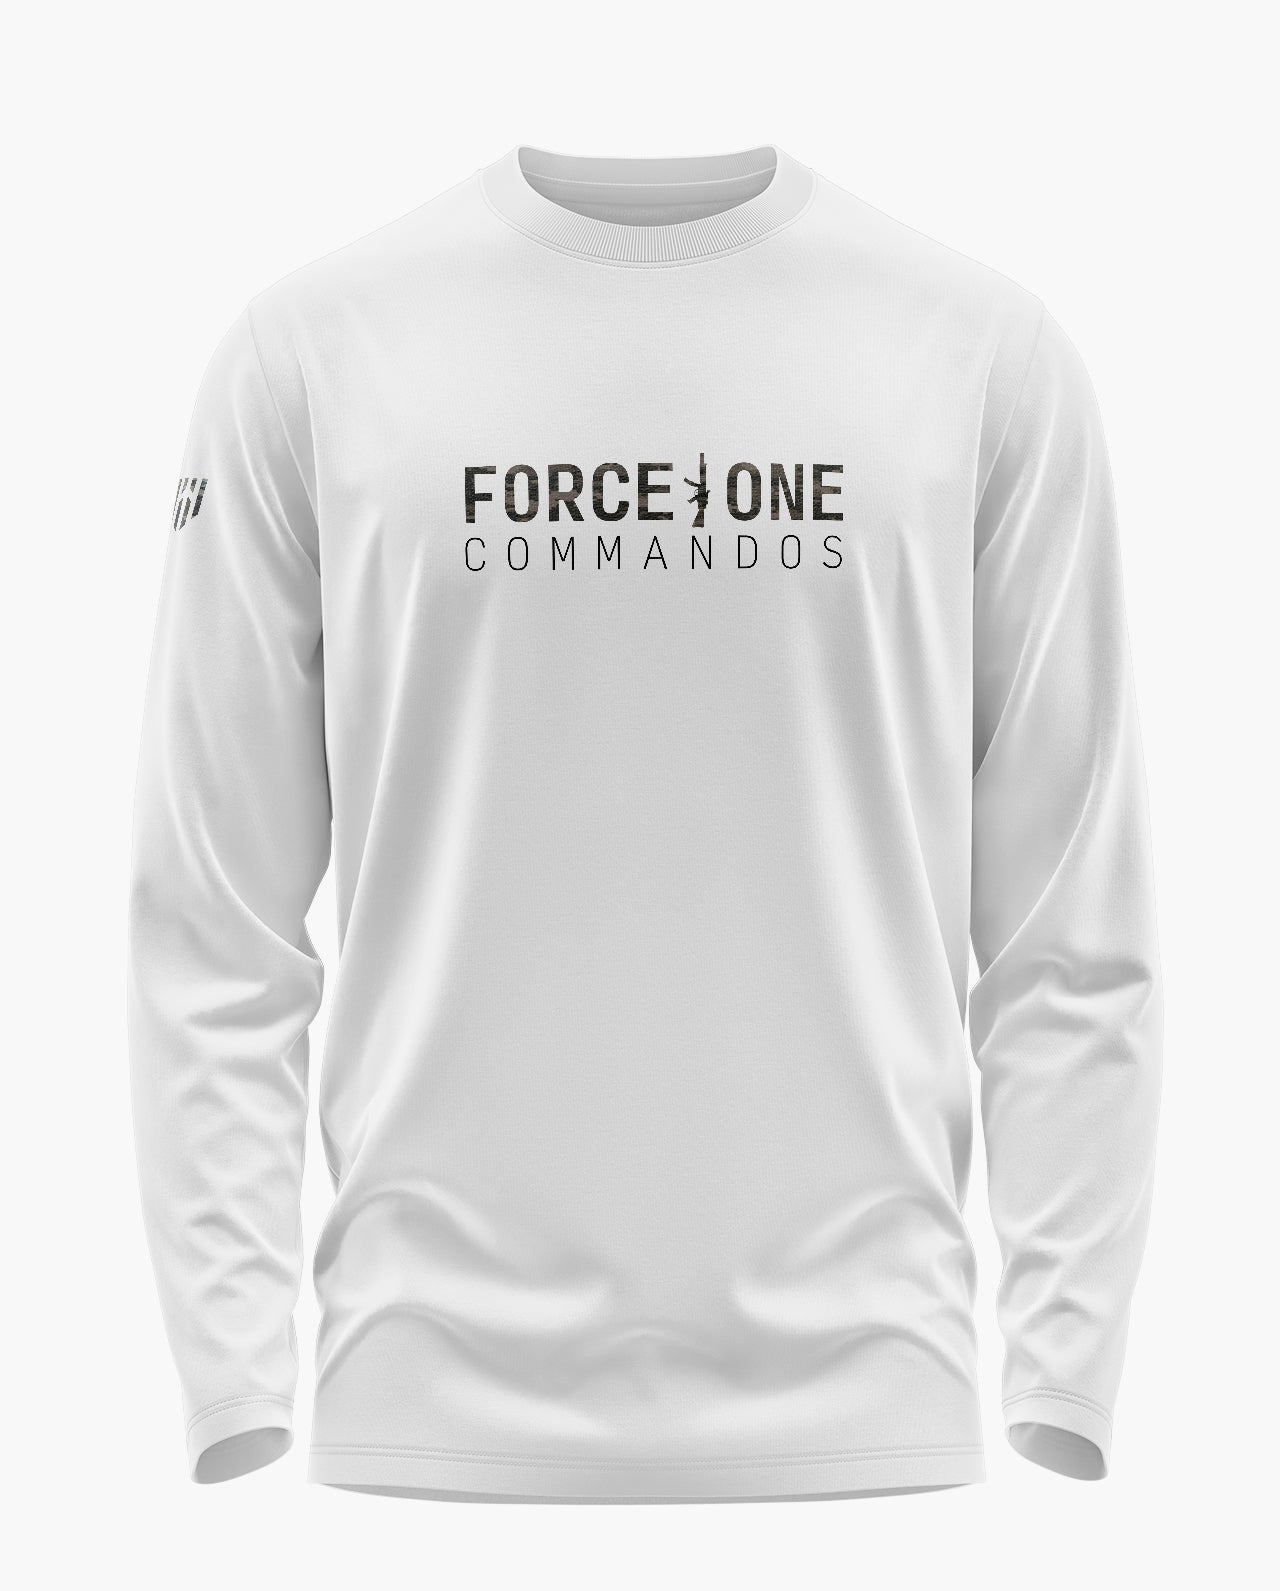 FORCE ONE COMMANDOS Full Sleeve T-Shirt